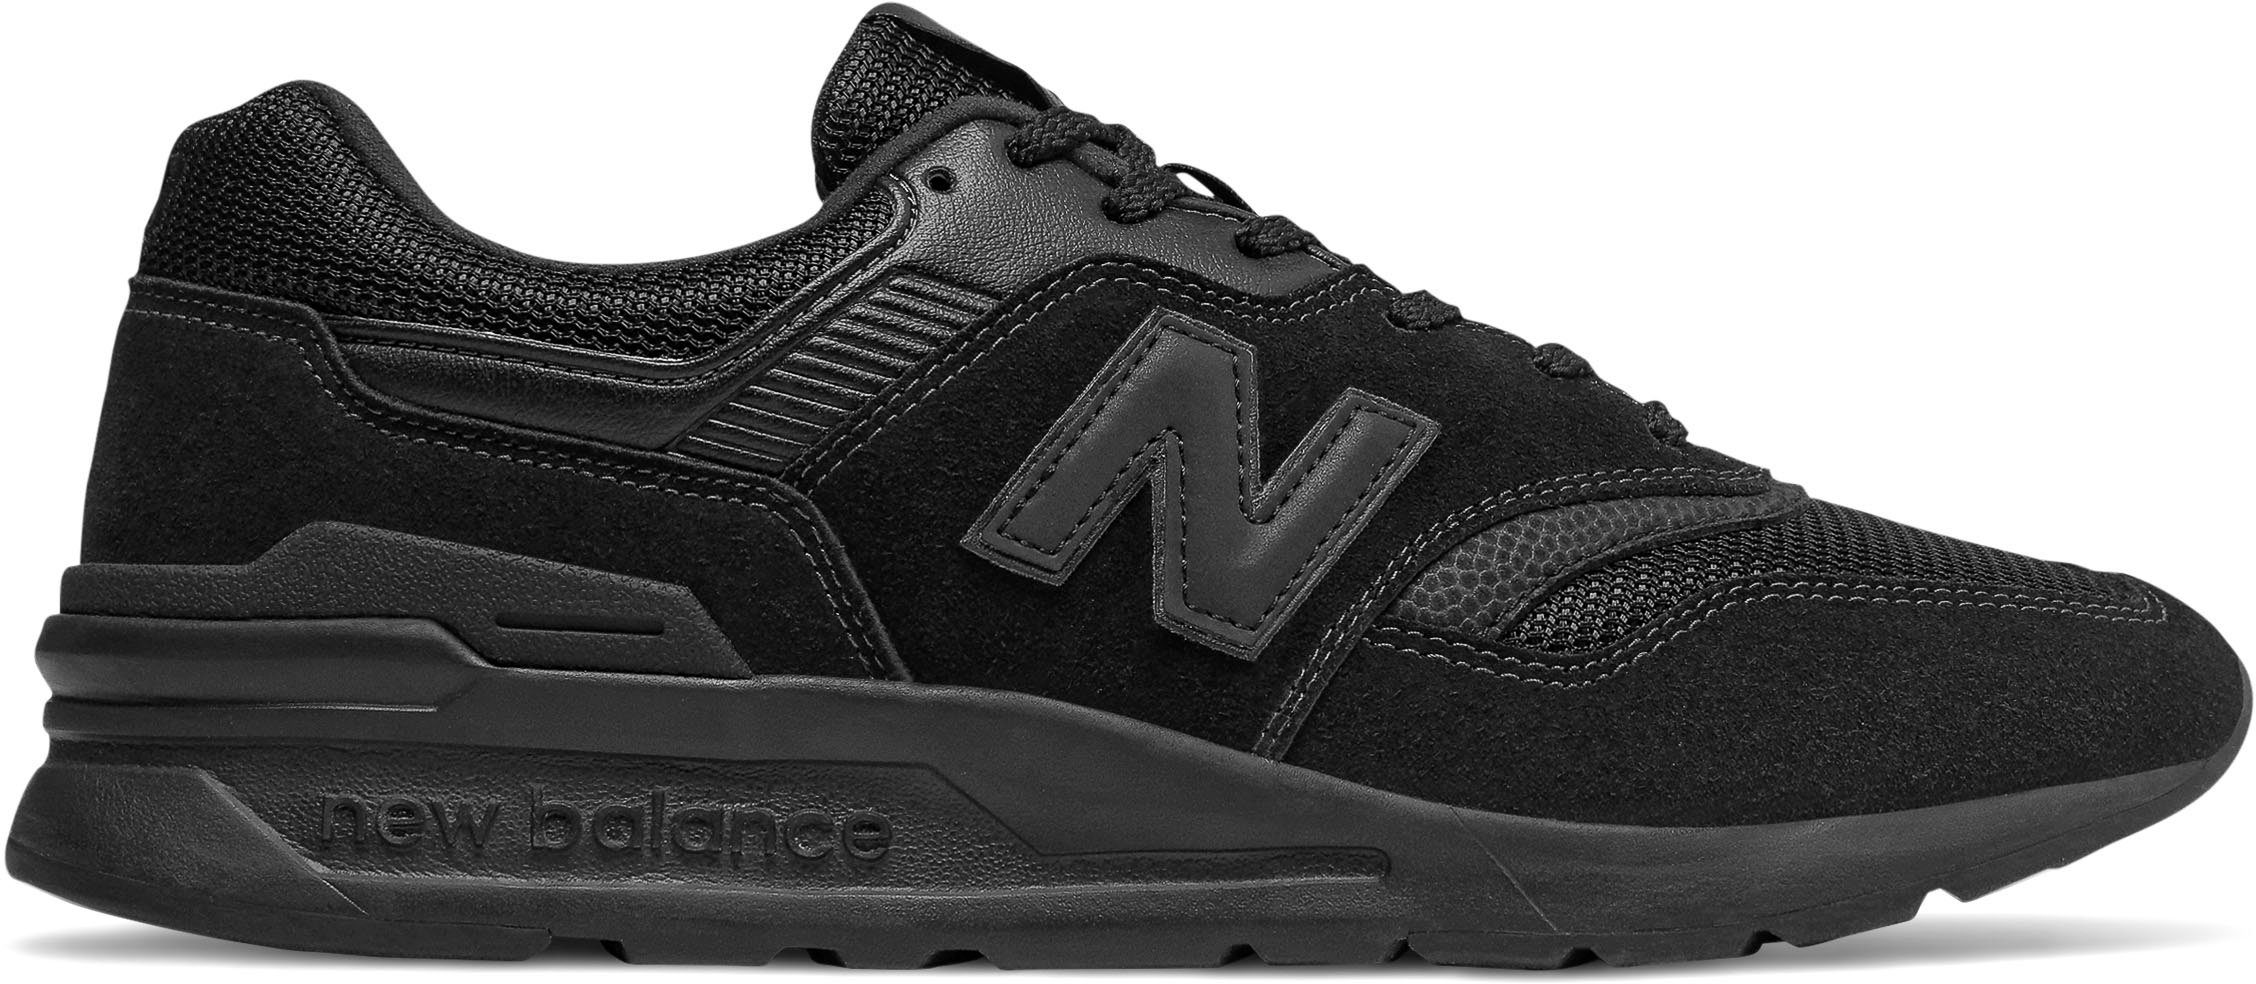 Sneaker schwarz New Balance CM 997